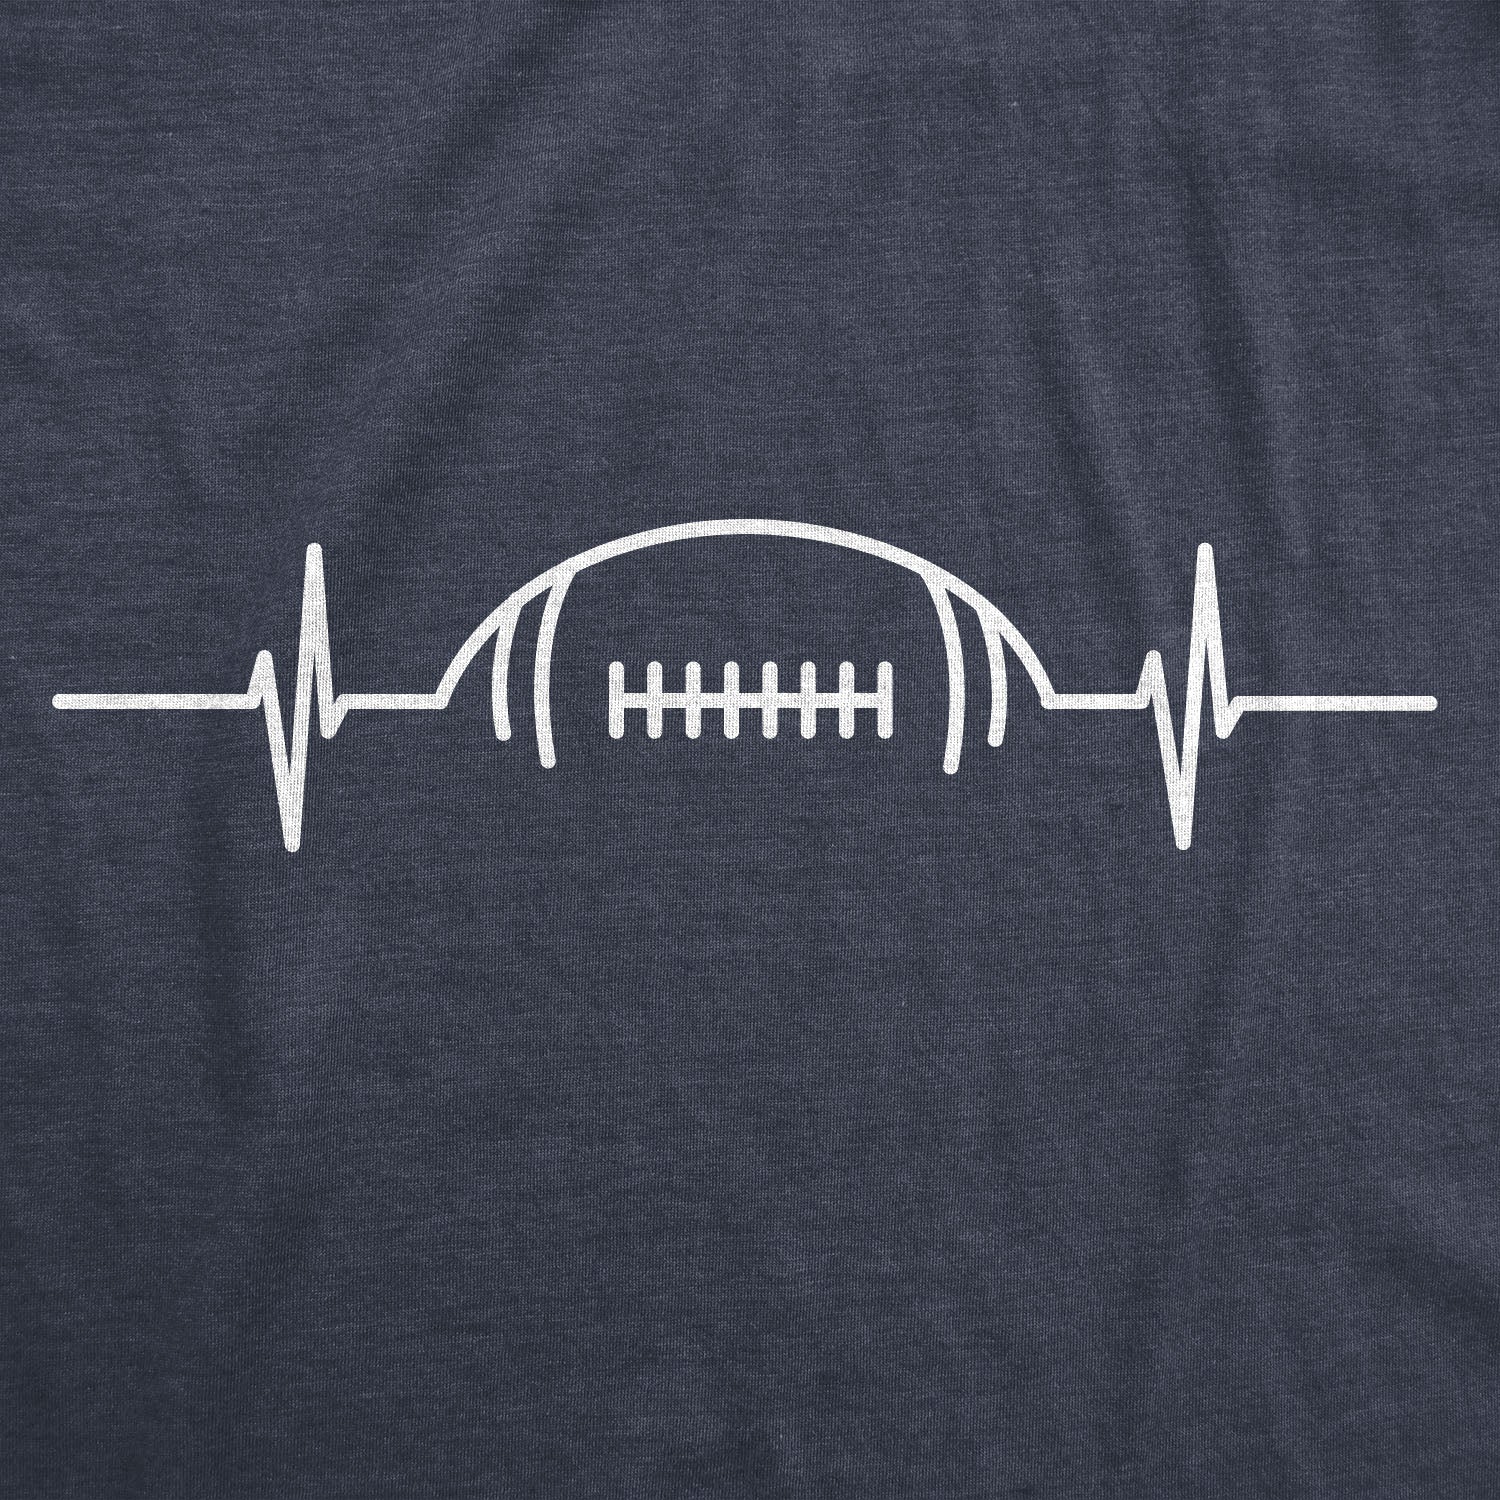 Funny Heather Navy - Football EKG Football Heart Rate Mens T Shirt Nerdy Football Tee